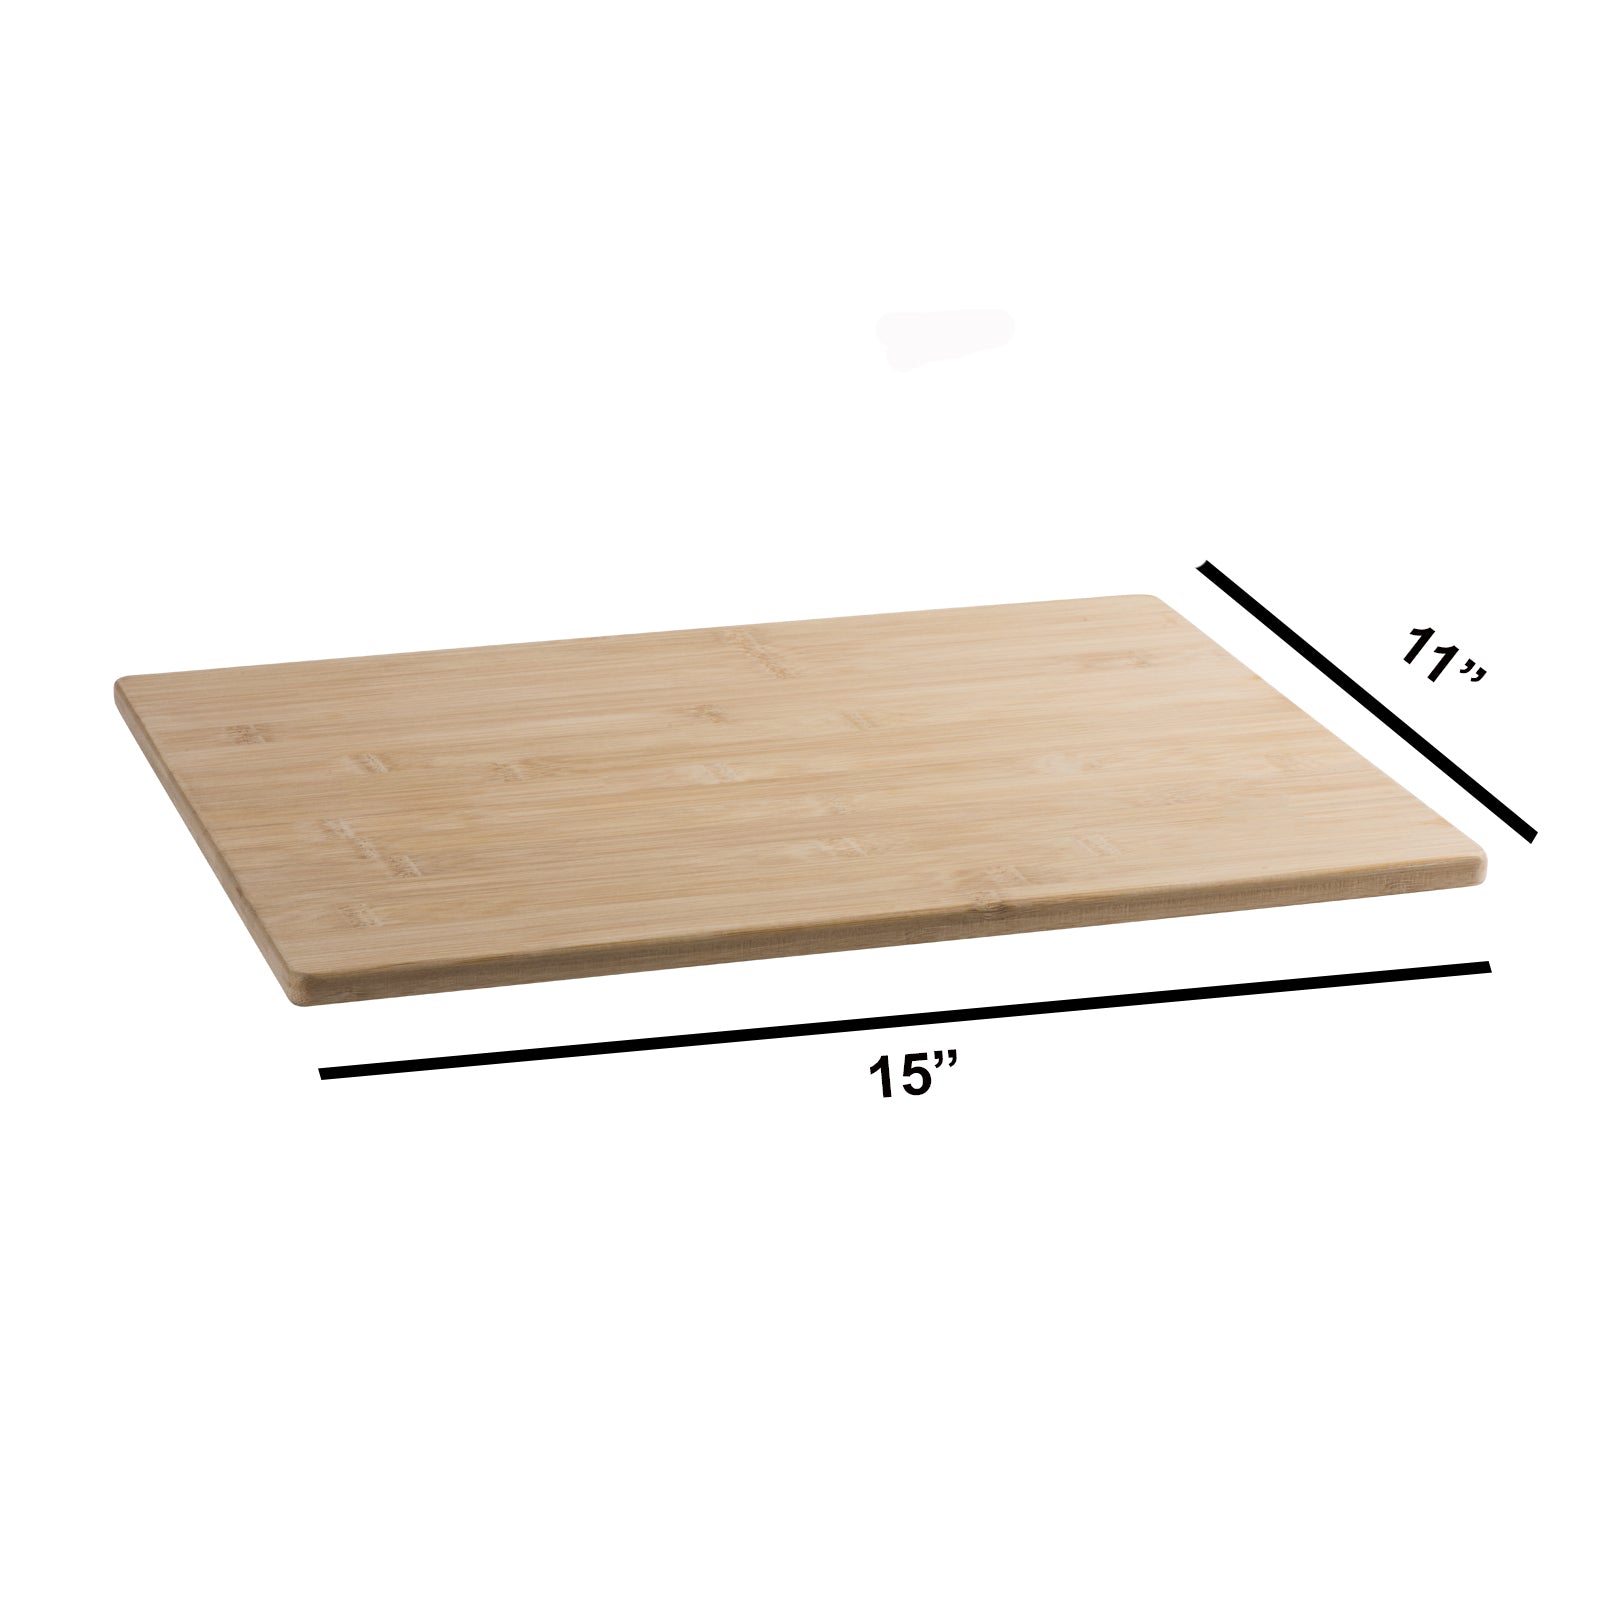 Home Essentials Kitchen Cutting Board 10.8 x 15 Inch Countertop